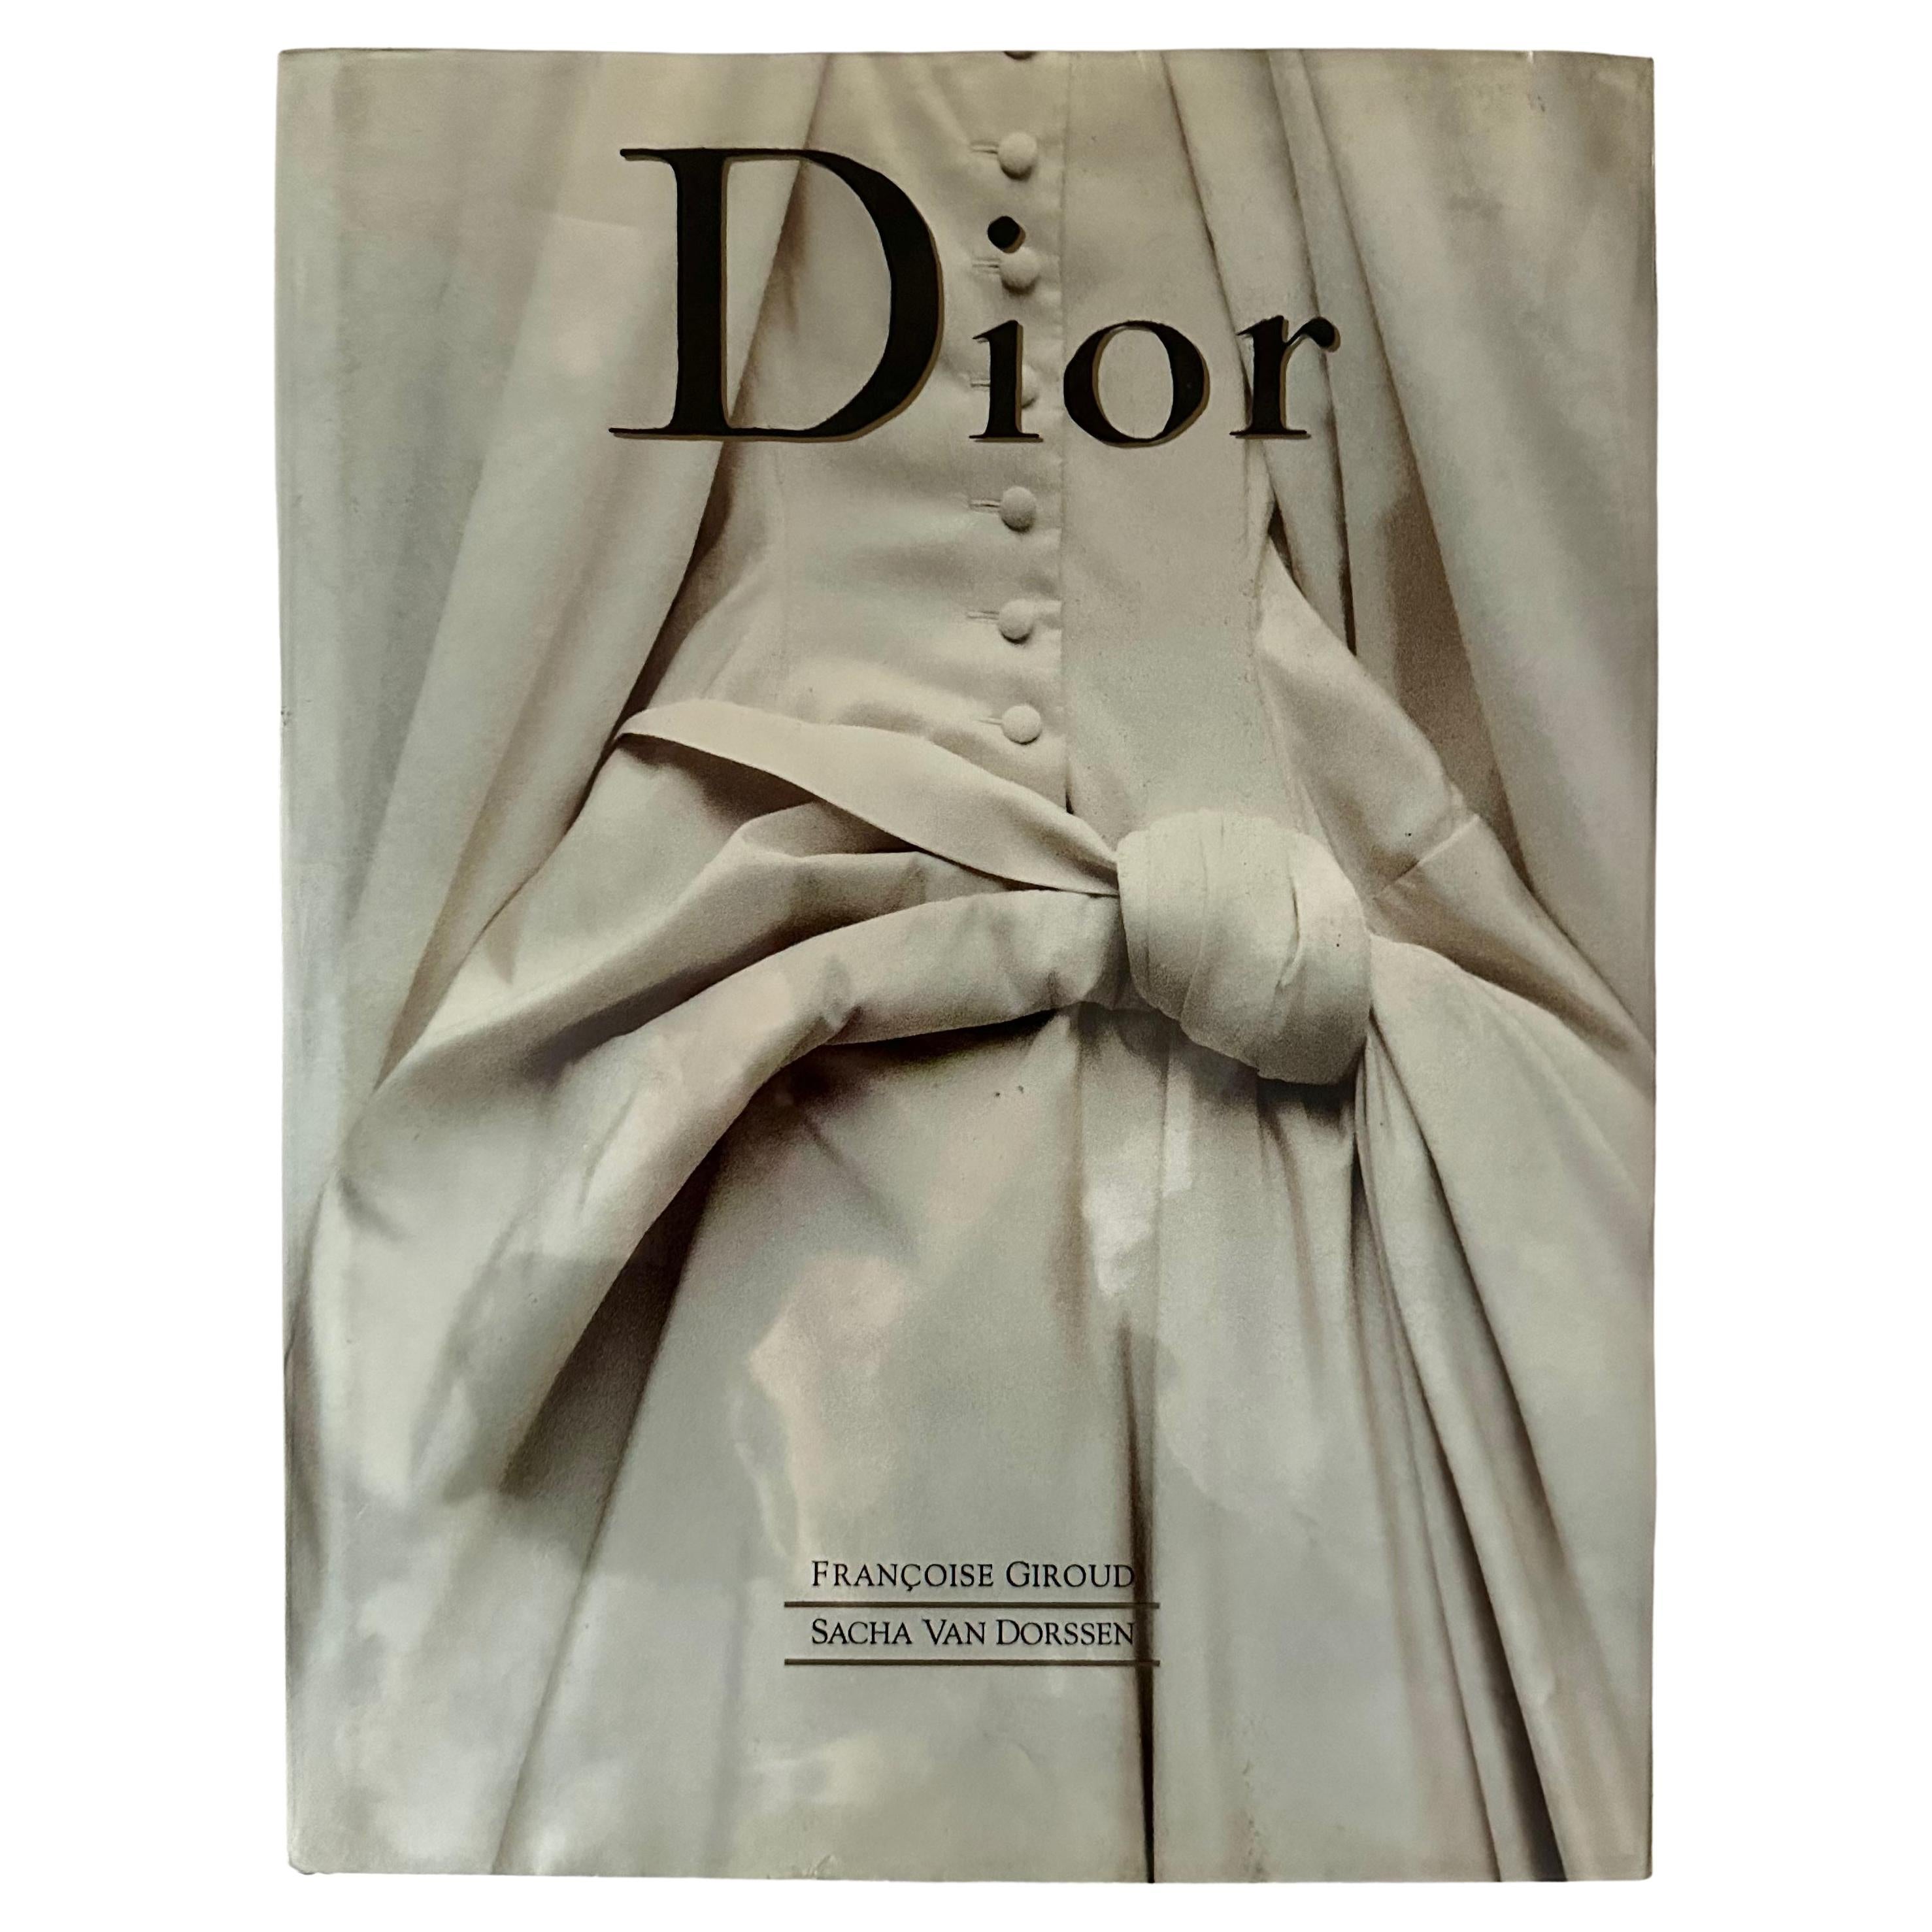 Dior - Françoise Giroud - 1st U. S. edition,  New York, 1987 For Sale